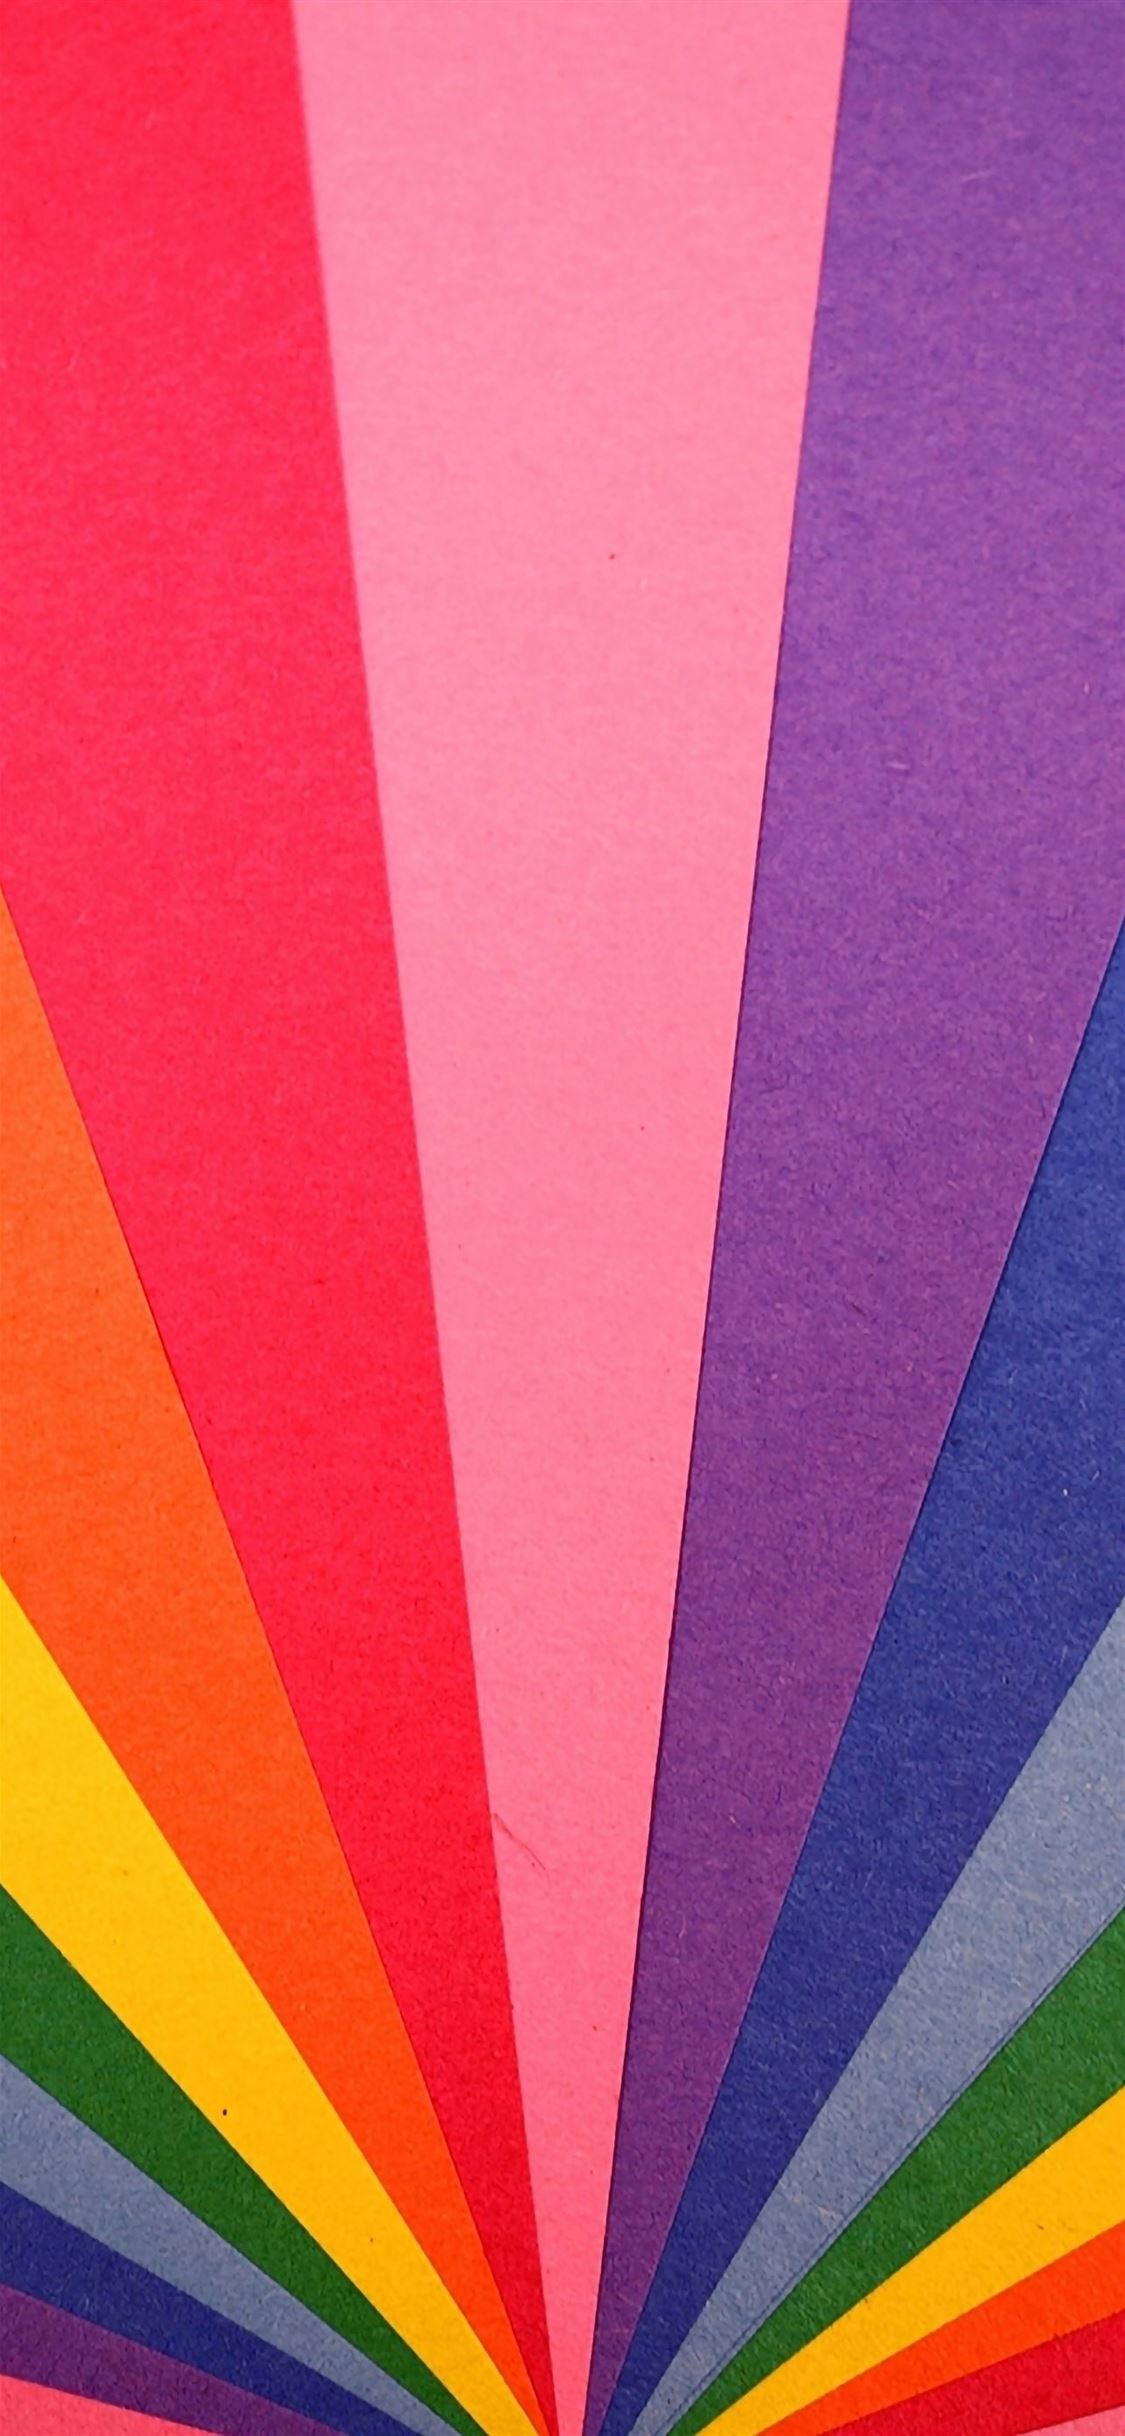 Rainbow light pattern iPhone Wallpaper Free Download